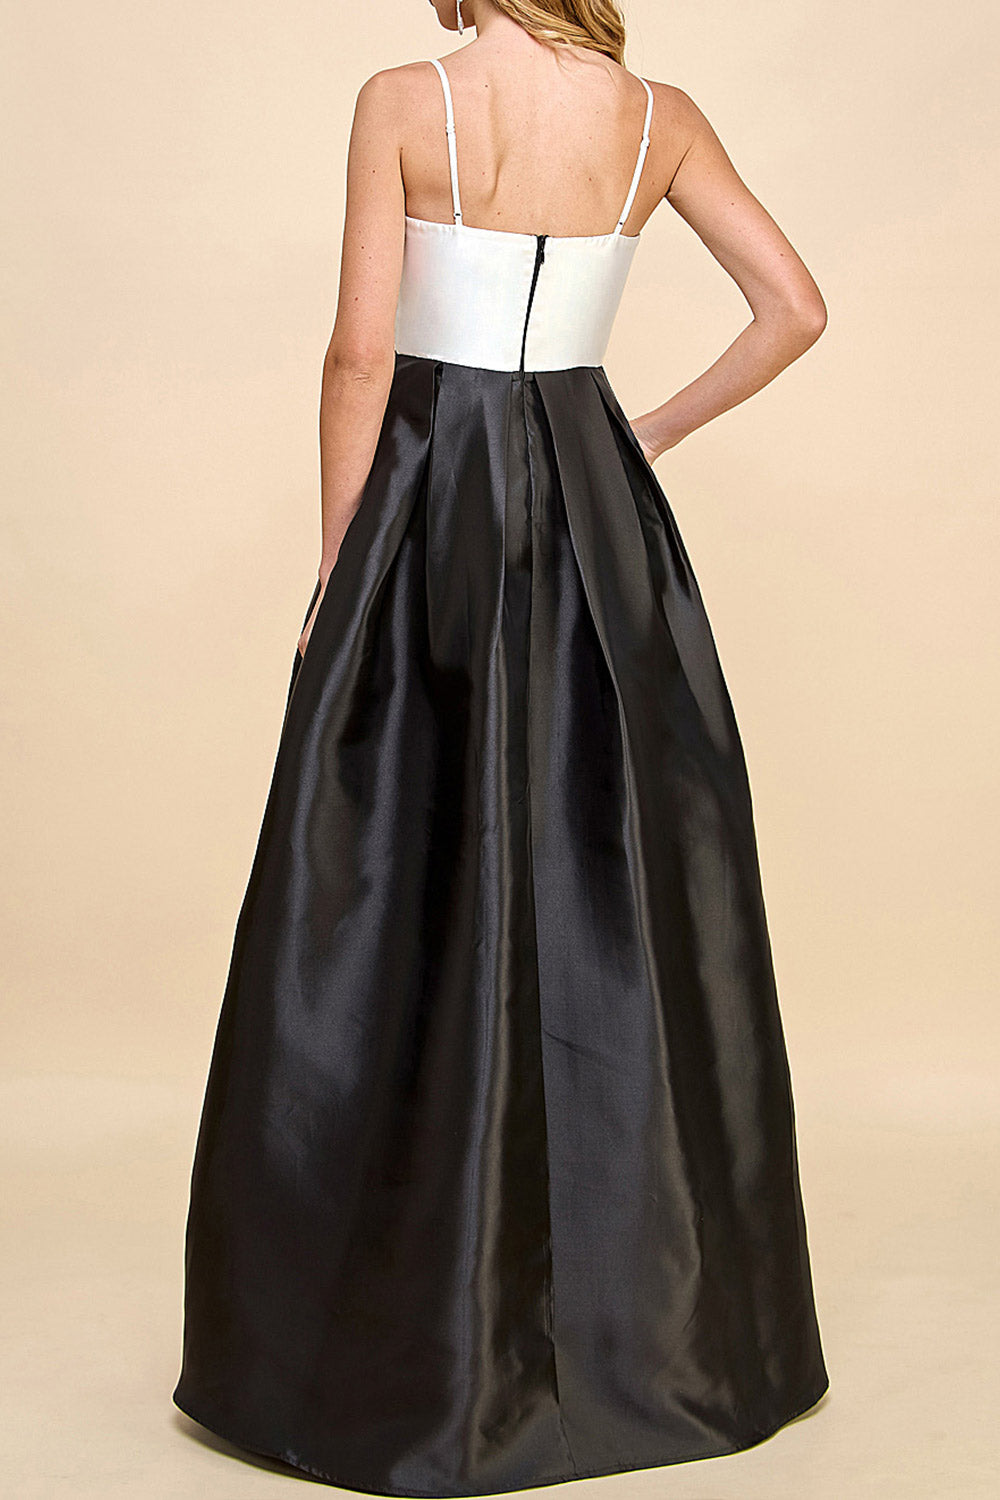 Adanel Black & White Maxi Dress w/ Slit | Boutique 1861 back on model